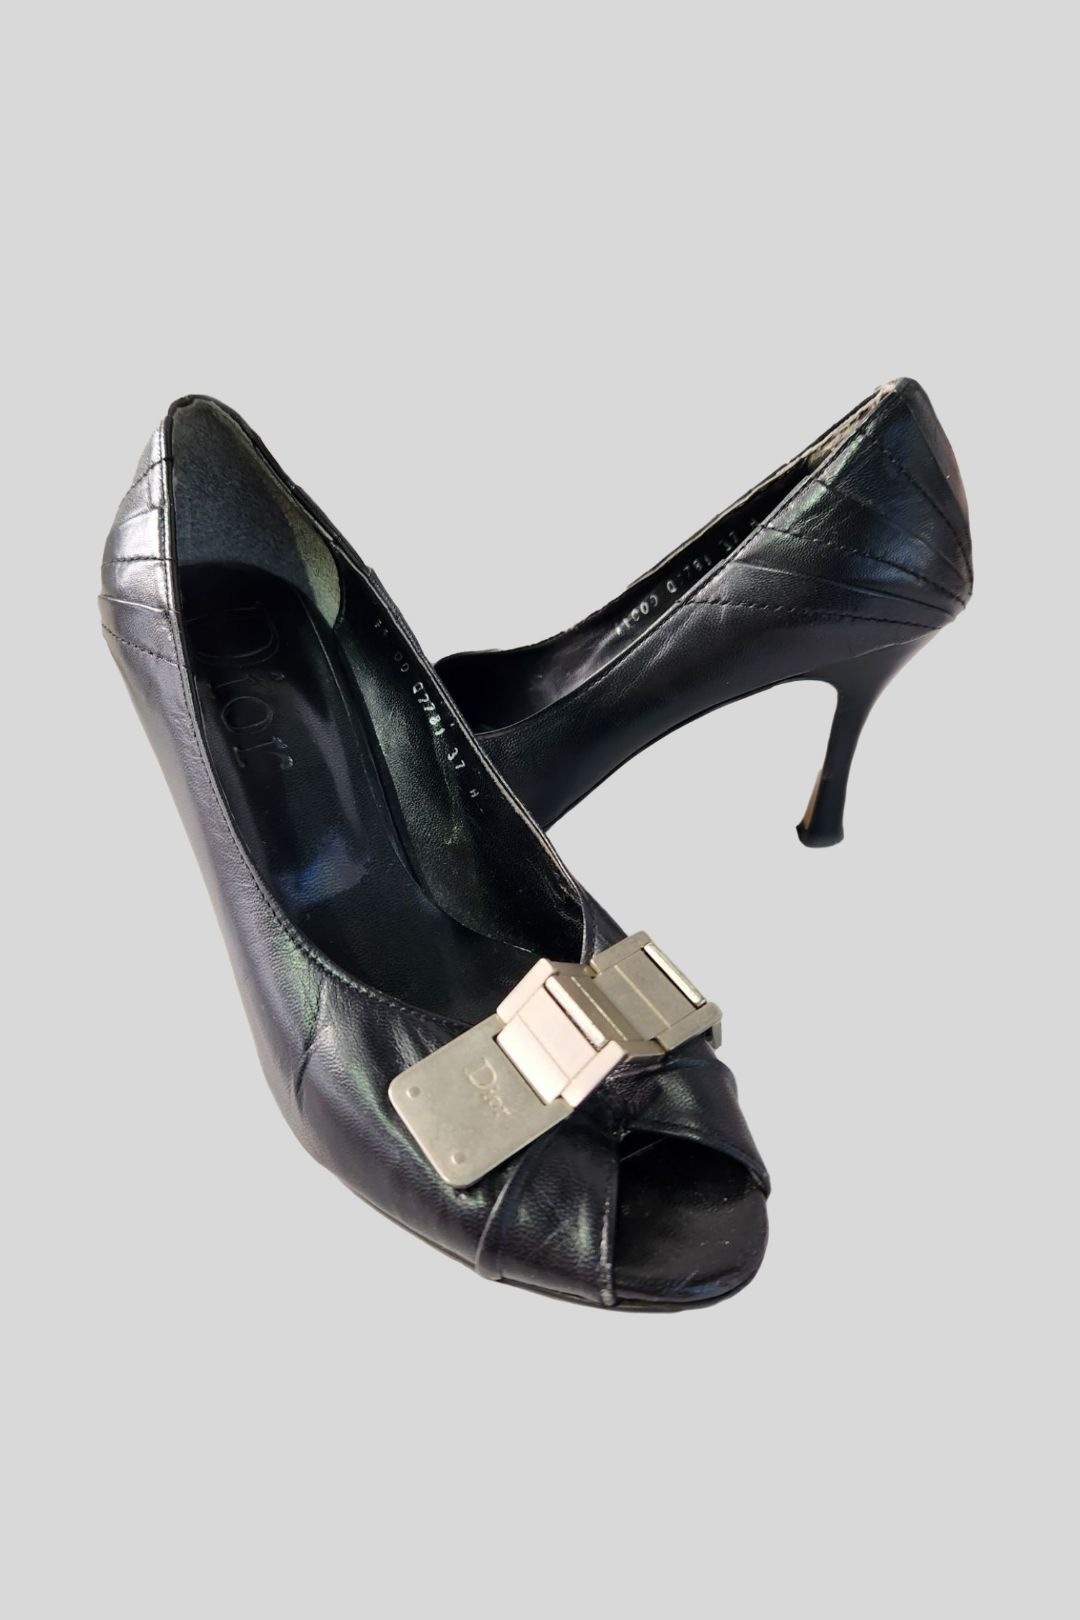 Dior Peep-Toe Black Stiletto Heels